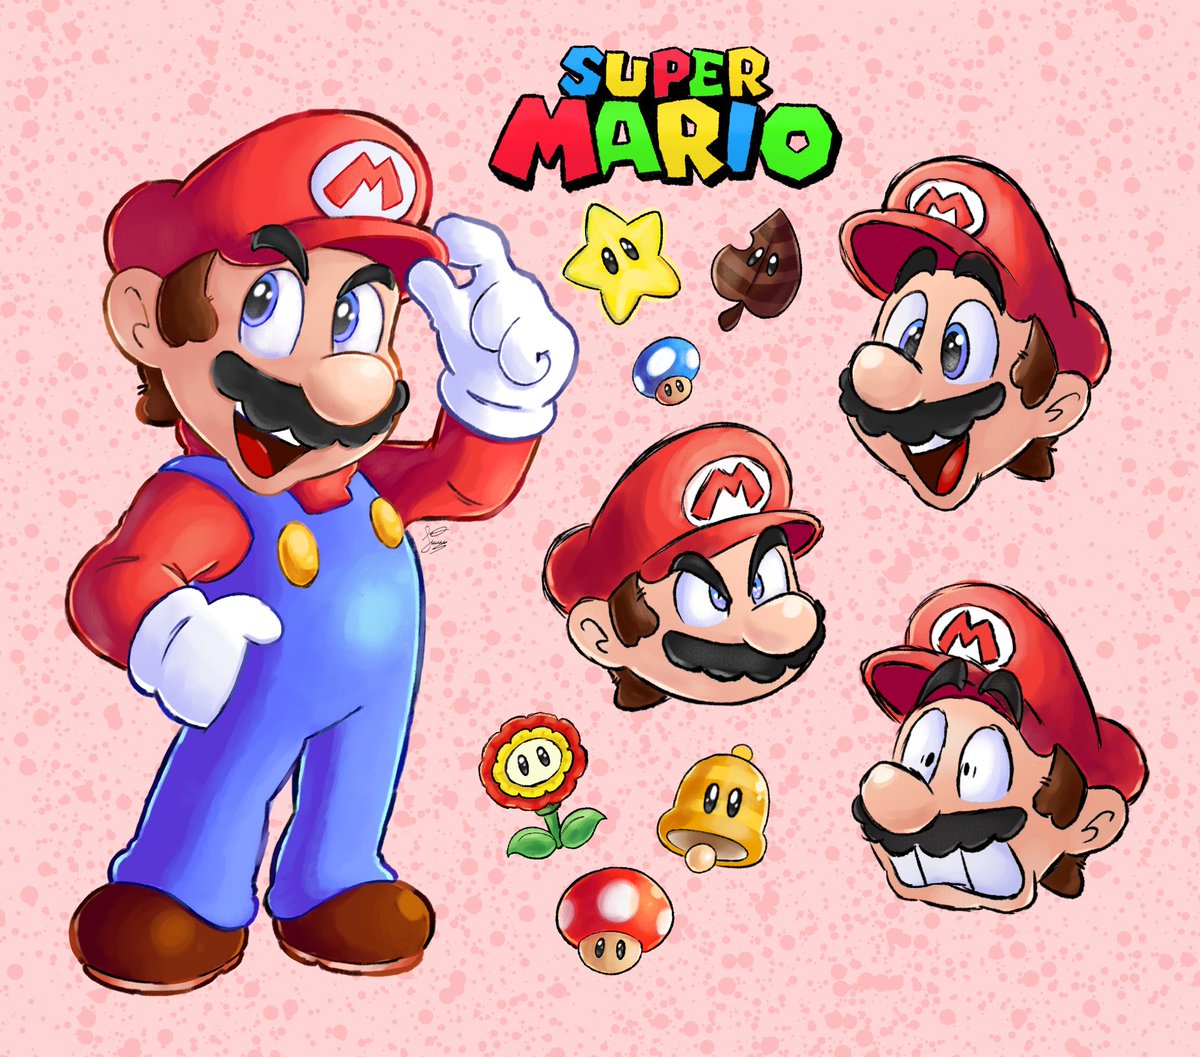 New year.. new style
Super Mario 🍄
#SuperMario #Mario #Marioandluigi #SuperMarioBrosWonder